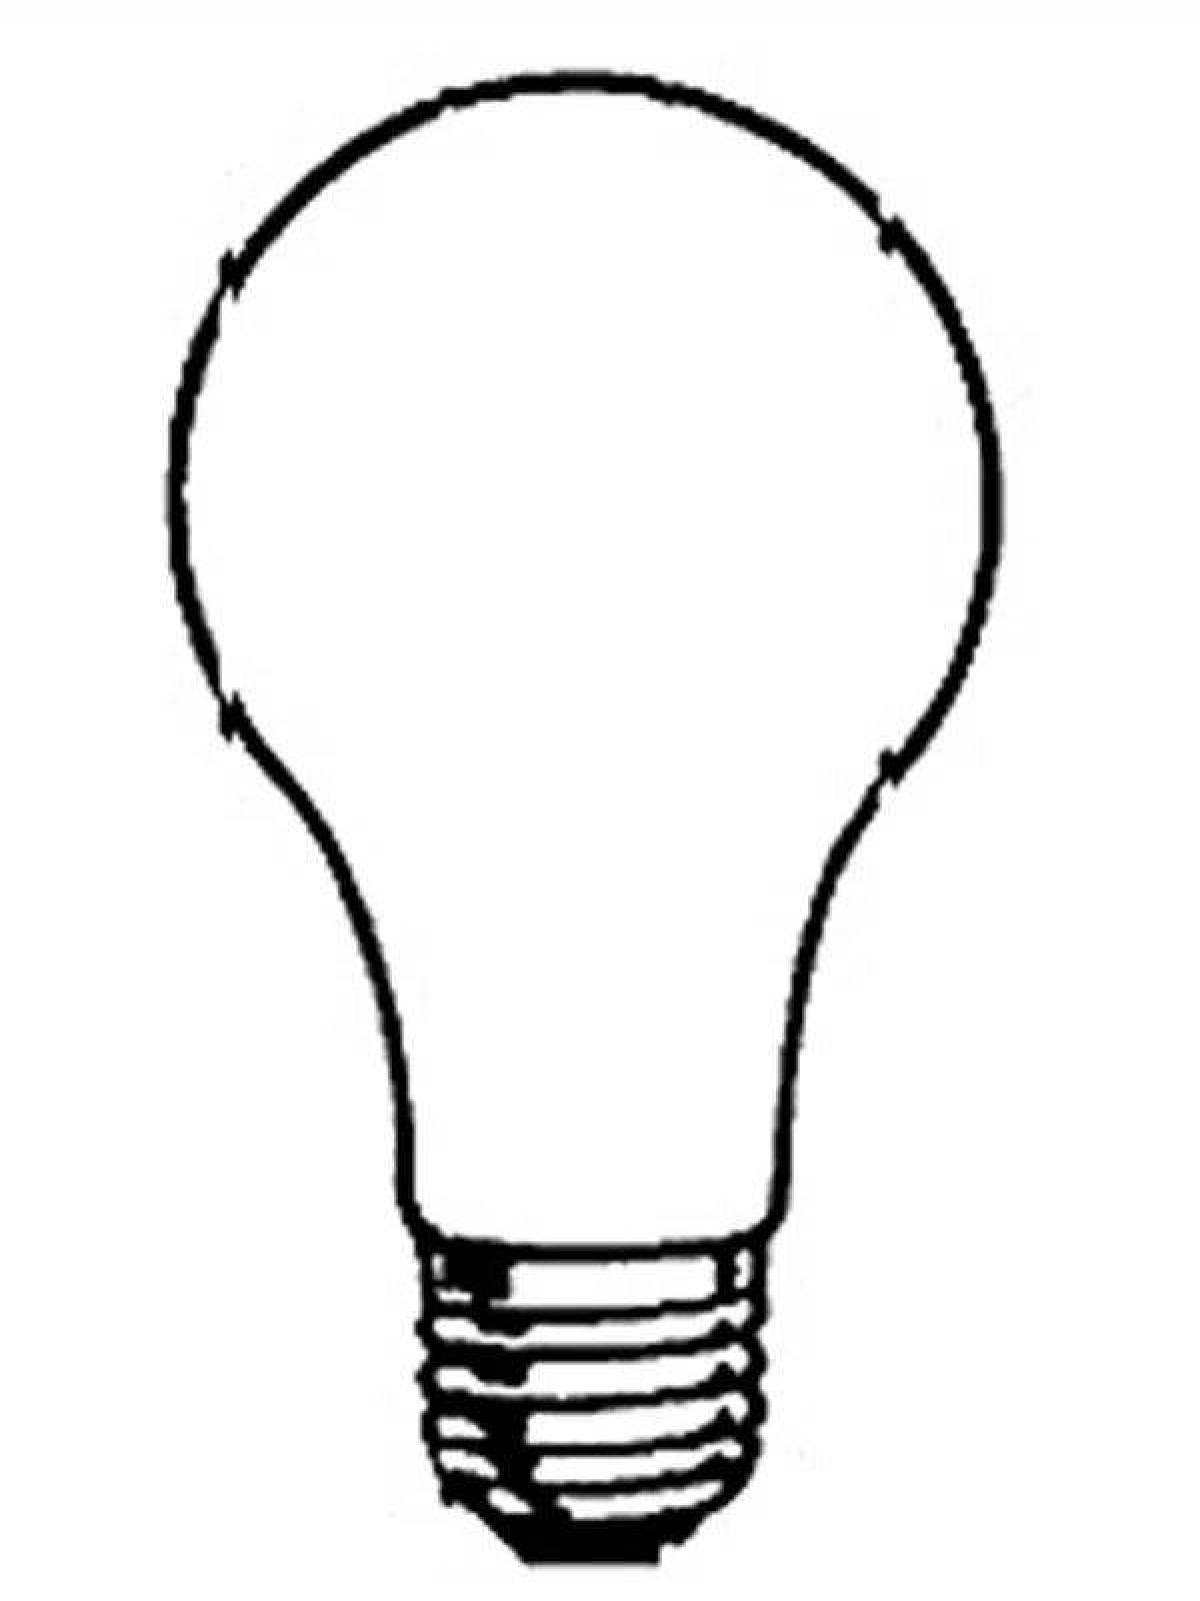 Coloring bright light bulb for children